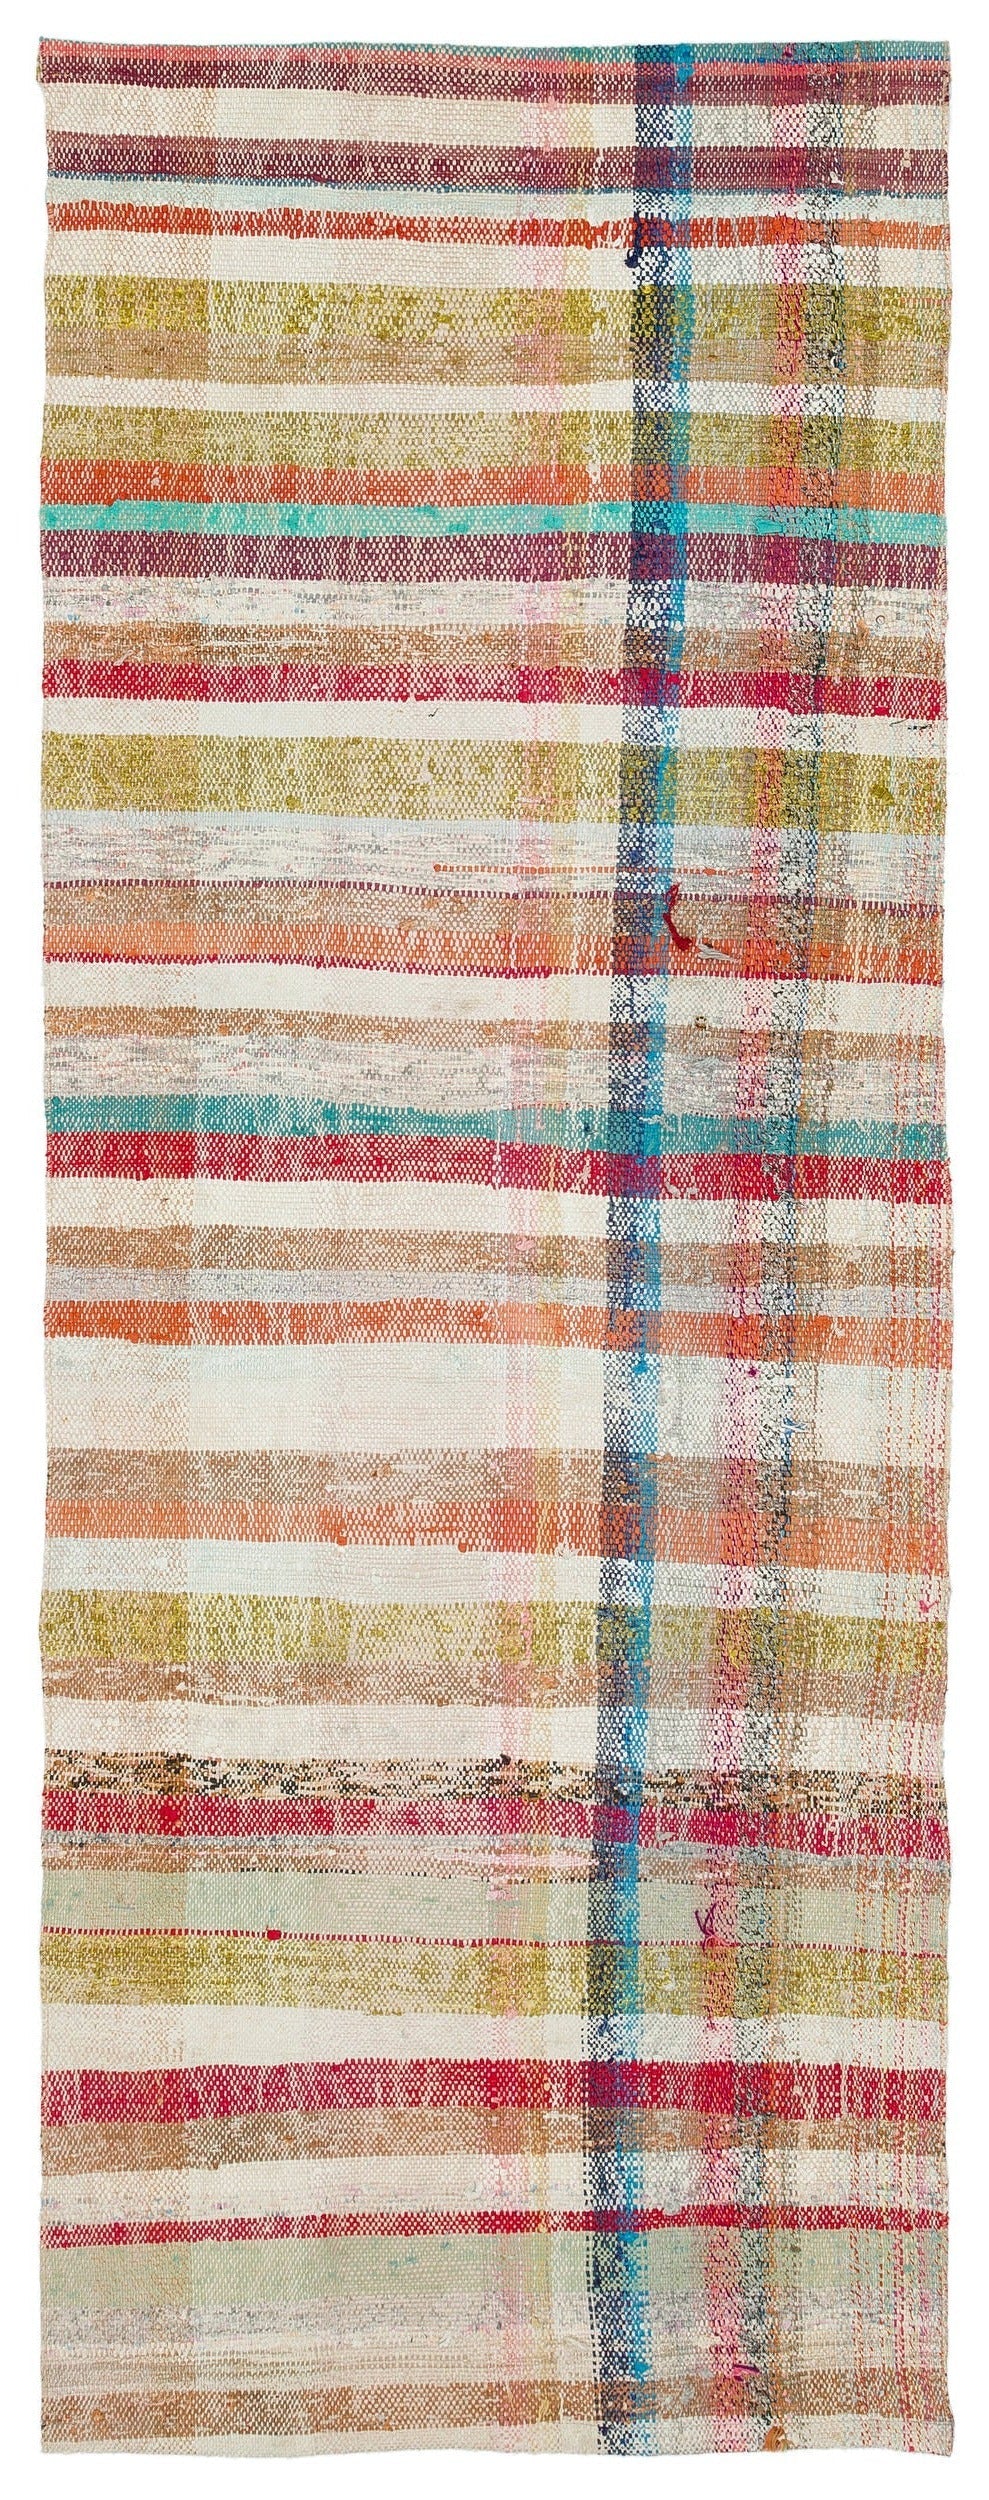 Cretan Beige Striped Wool Hand-Woven Carpet 084 x 225